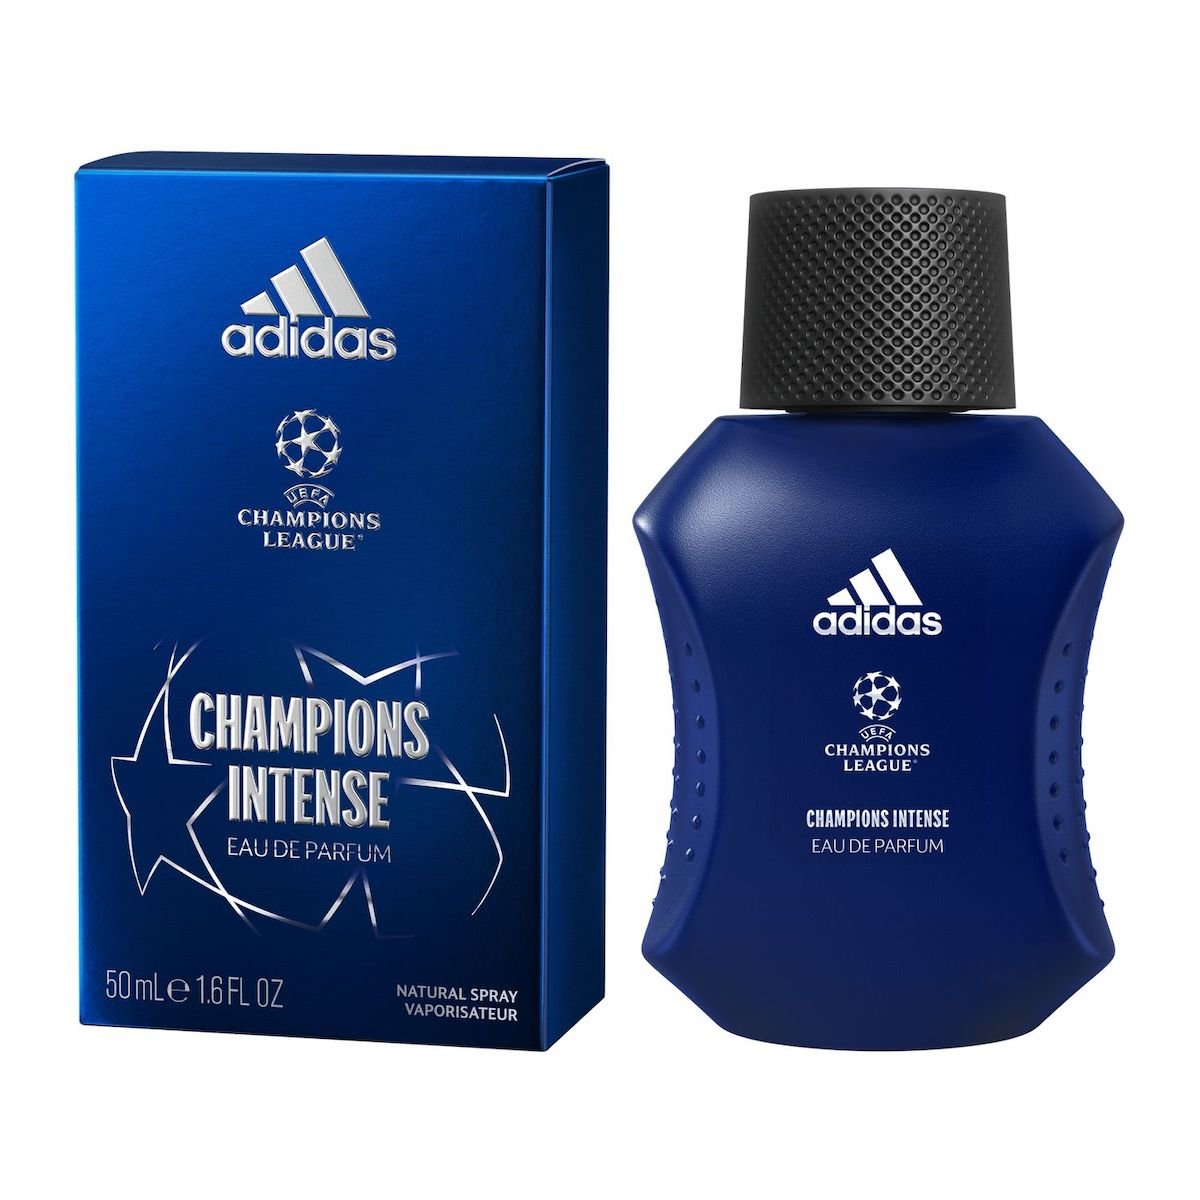 Zdjęcia - Perfuma męska Adidas , Uefa Champions League Champions Intense, woda perfumowana, 50 ml 